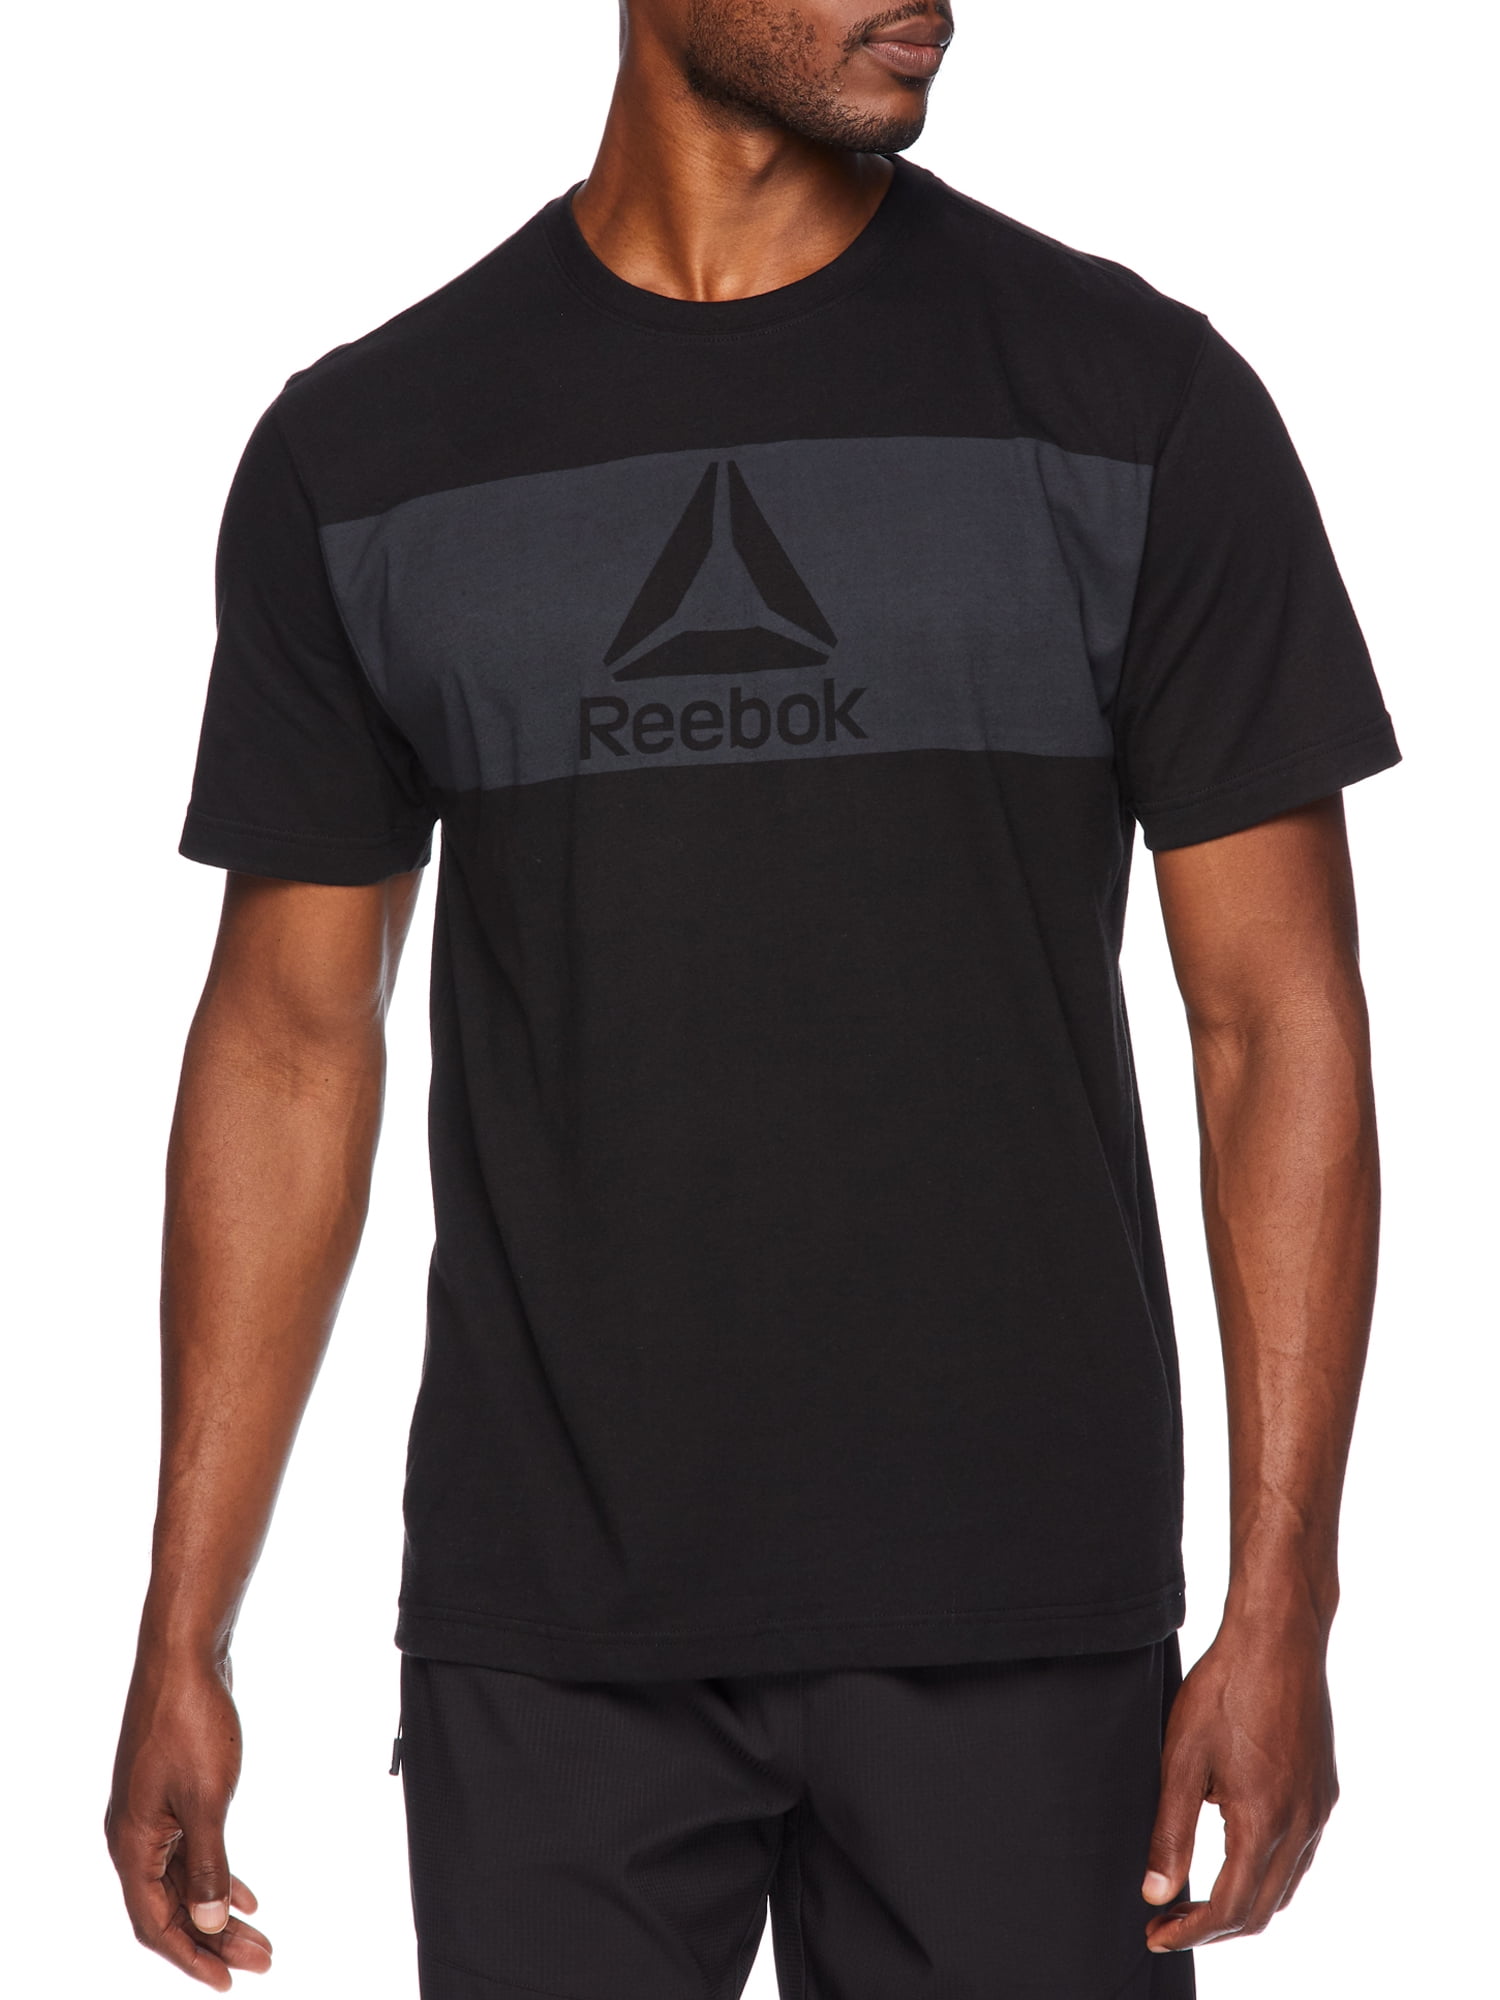 Reebok Men's Colorblocked T-Shirt - Walmart.com